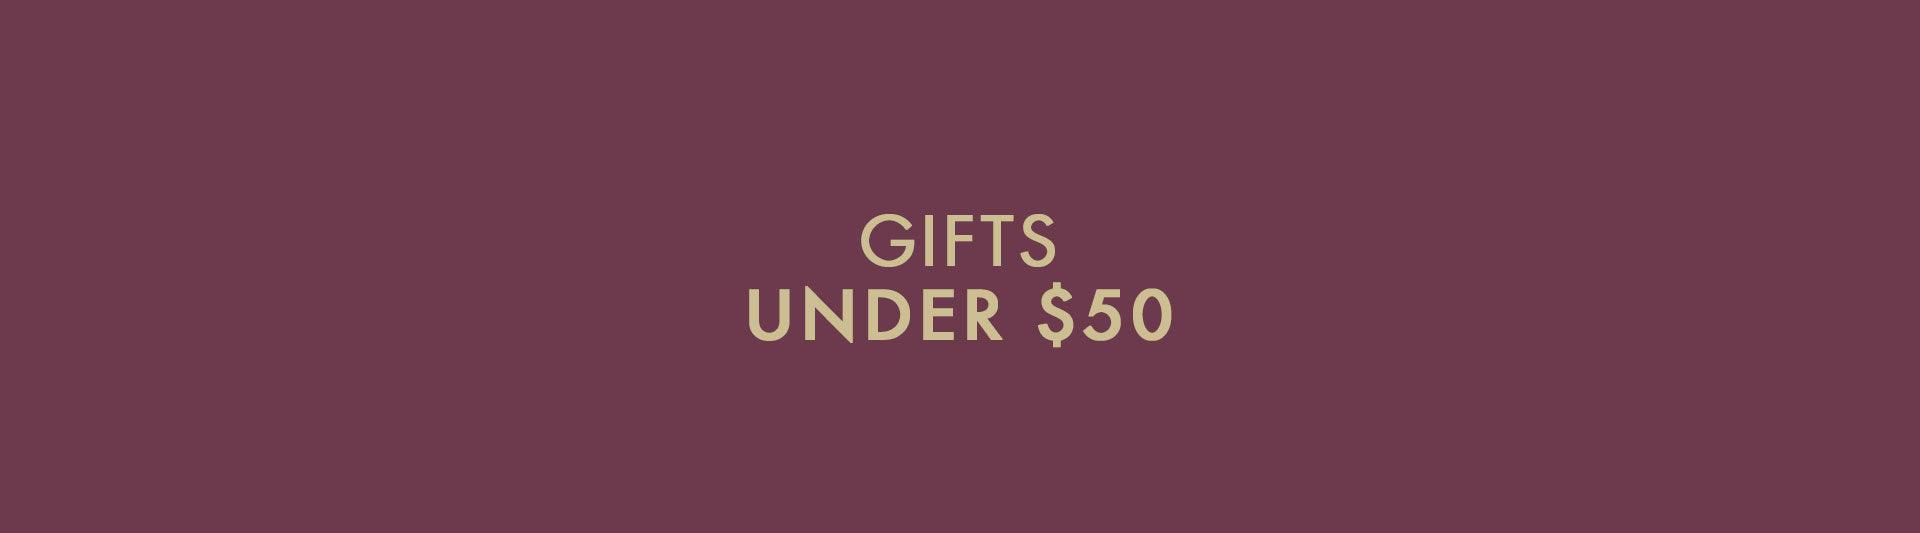 Yoga Gifts Under $50 - Yoga Design Lab 